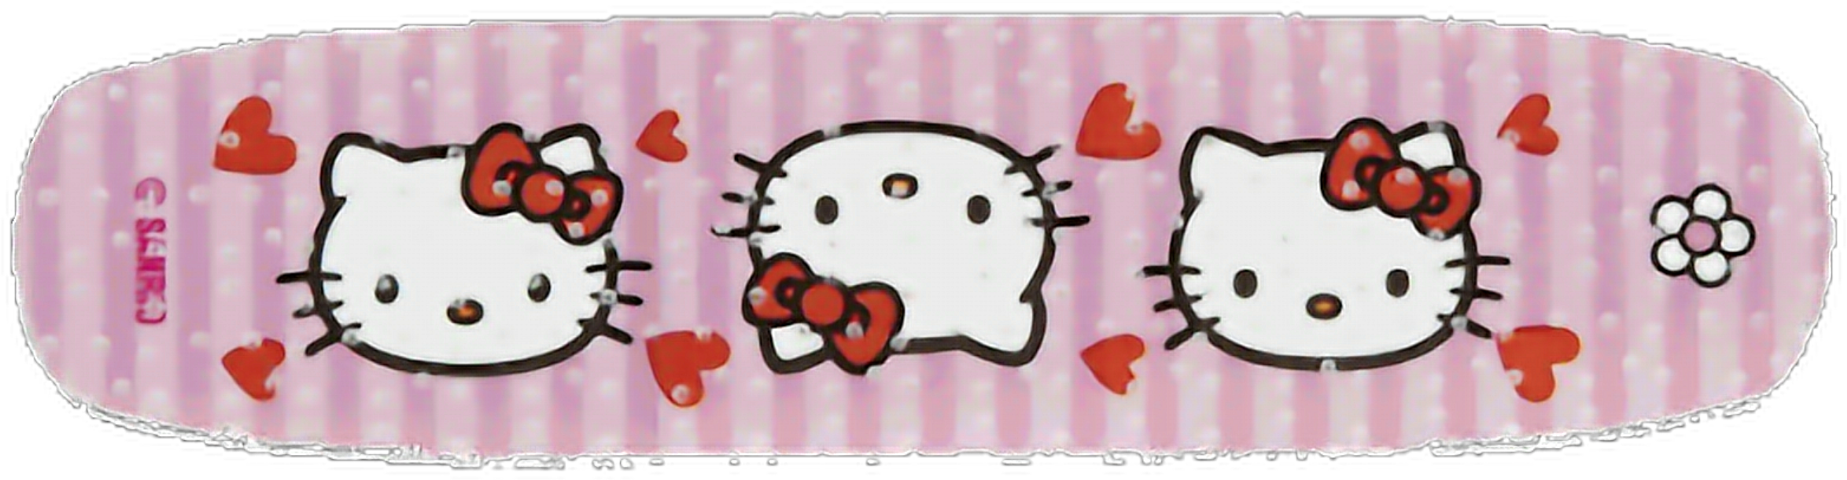 Hello Kitty Adhesive Bandage PNG image